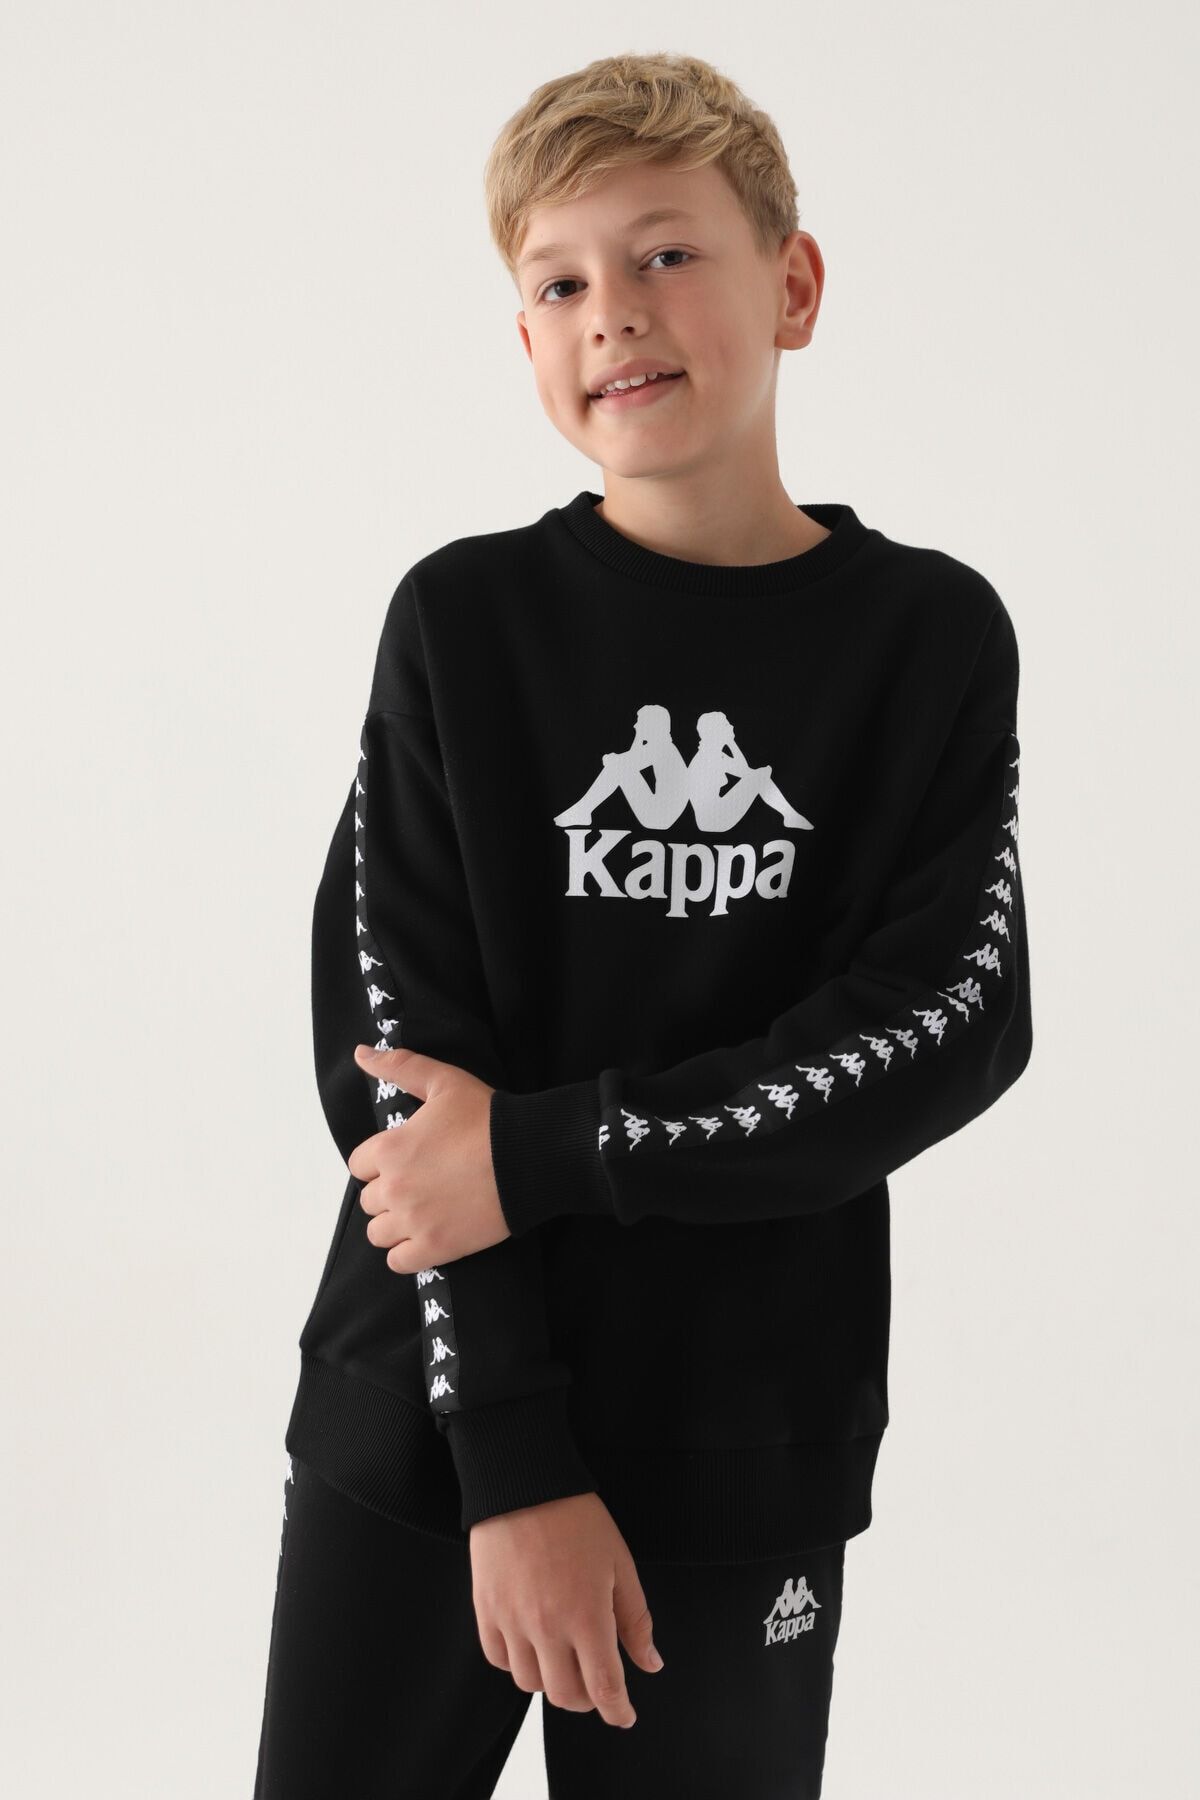 Kappa تی شرت پسرانه با چاپ جزئیات آستین یقه مشکی